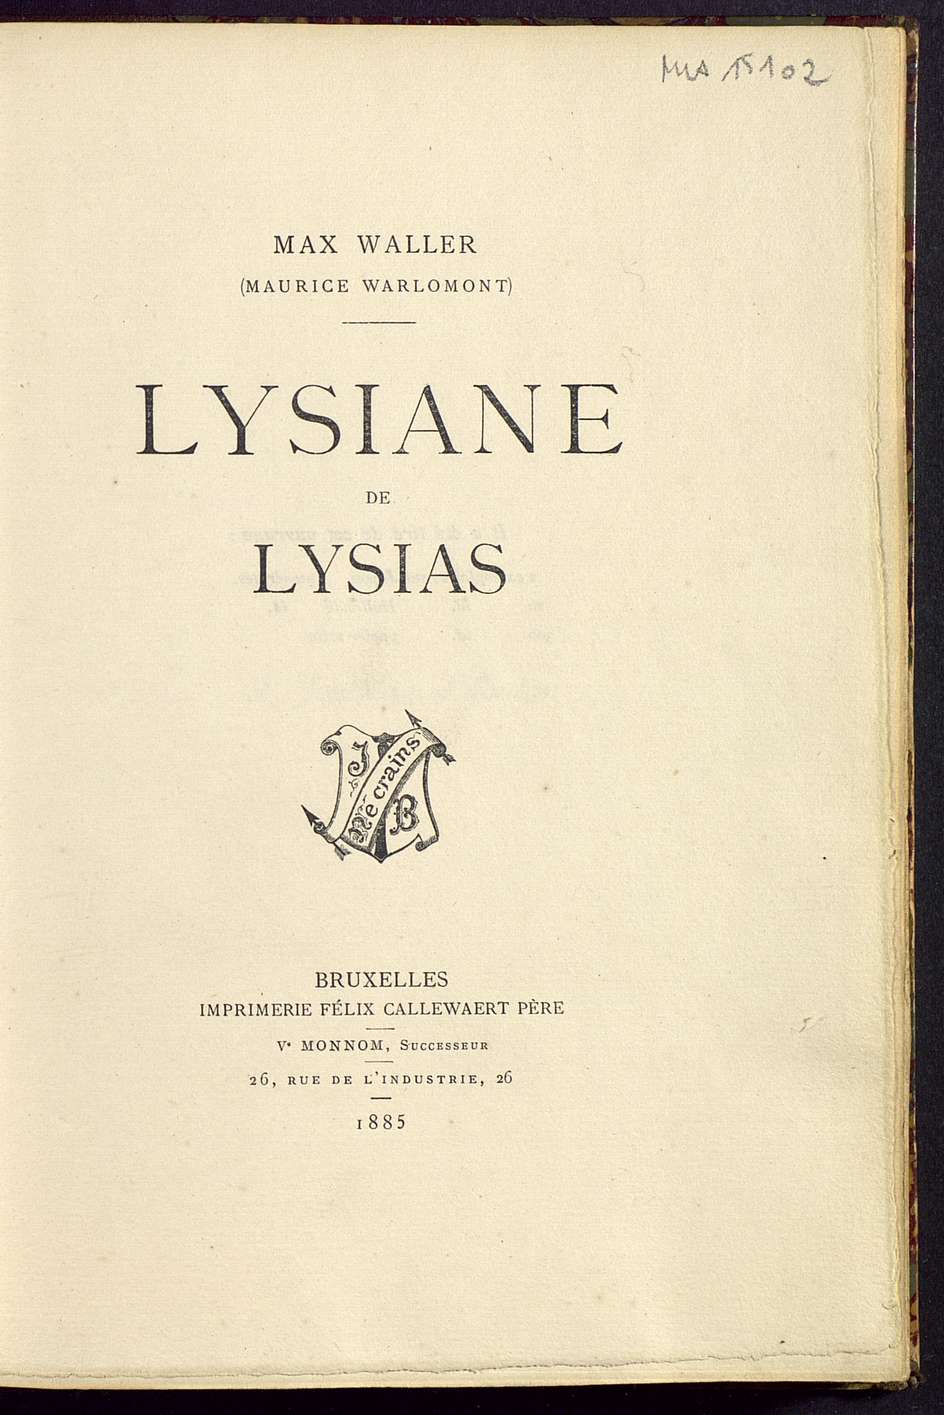 Lysiane de Lysias